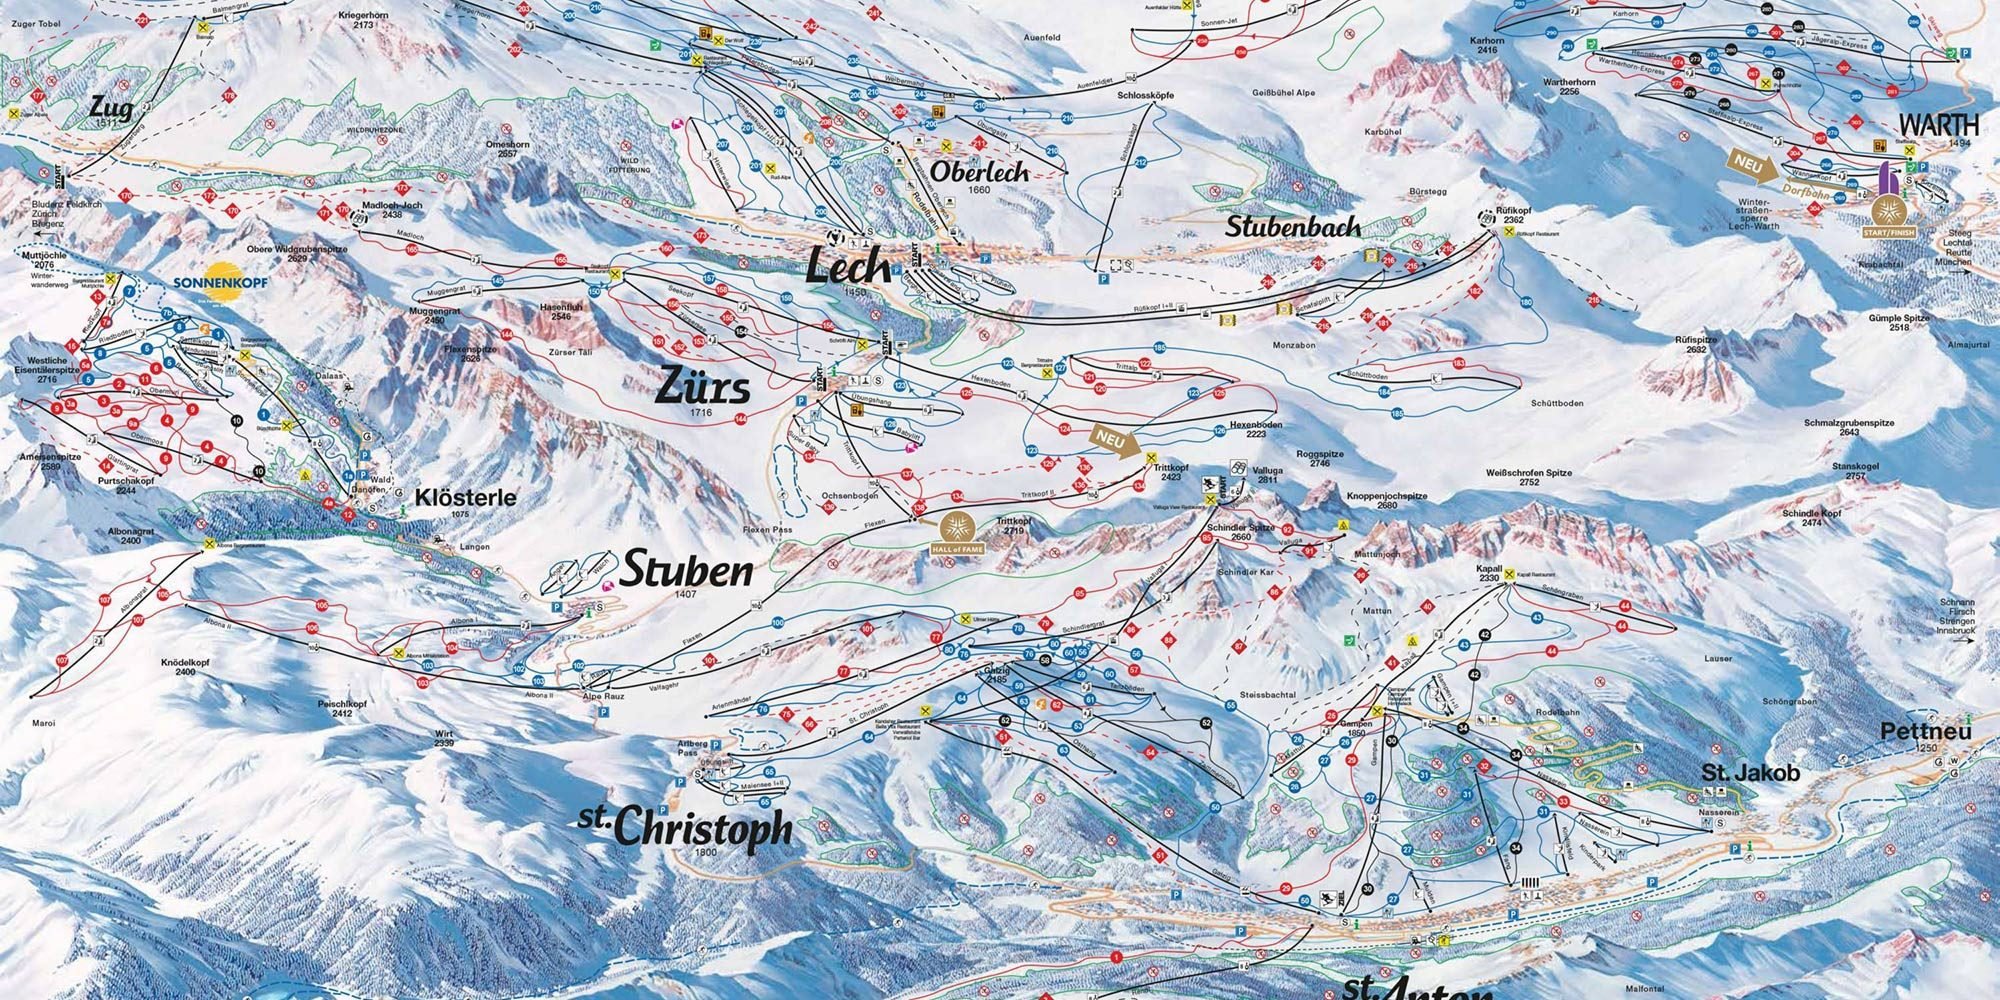 St Christoph, St Anton, Lech, Ski Map 2018